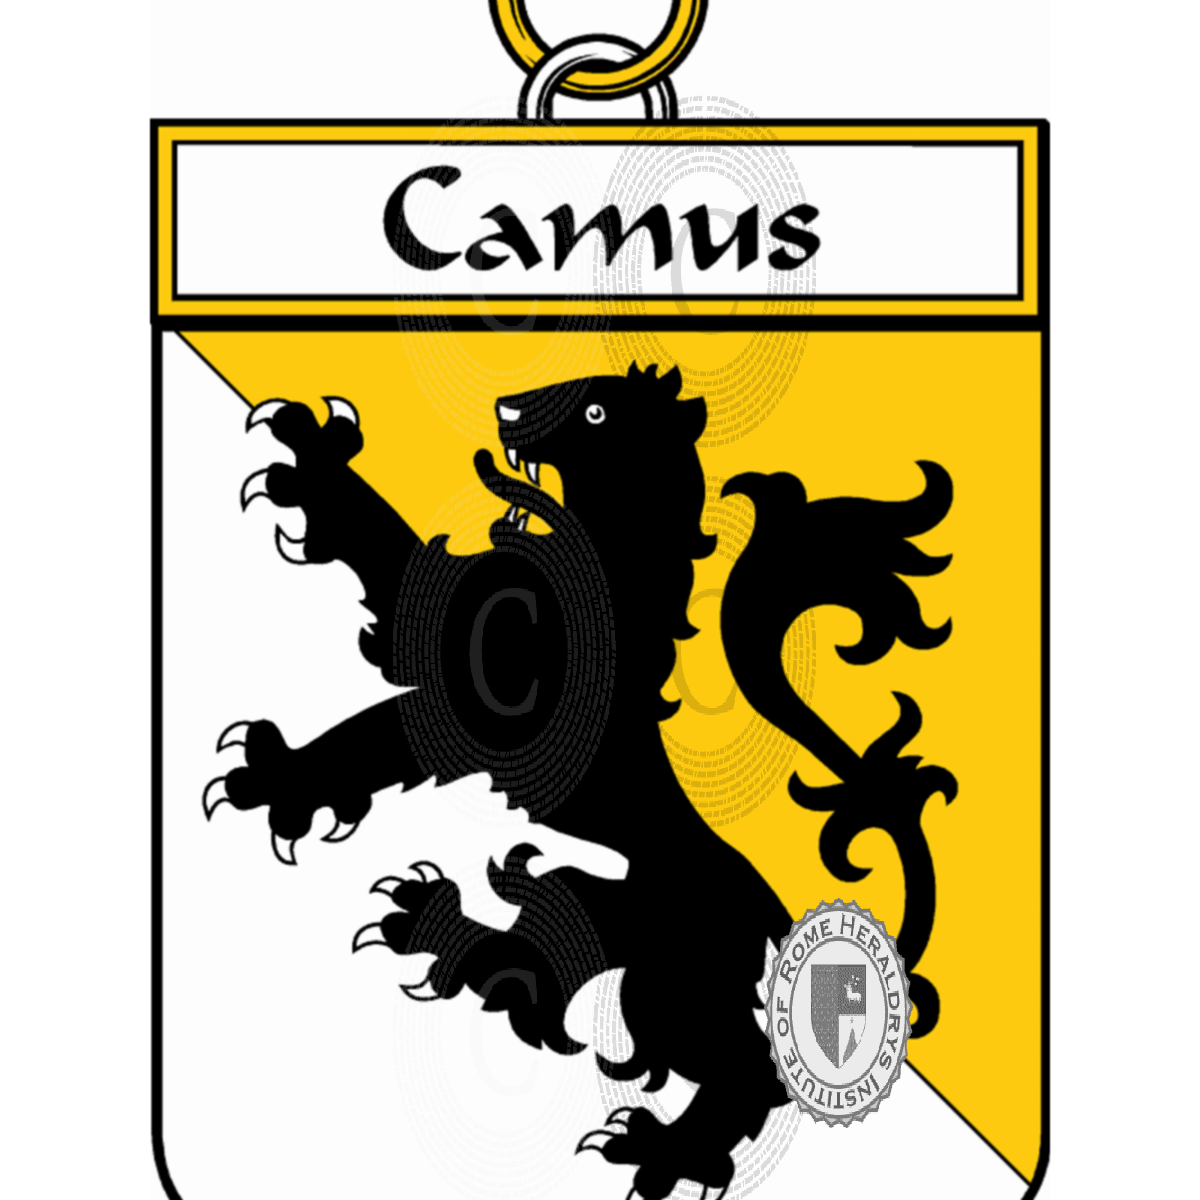 Wappen der FamilieCamus